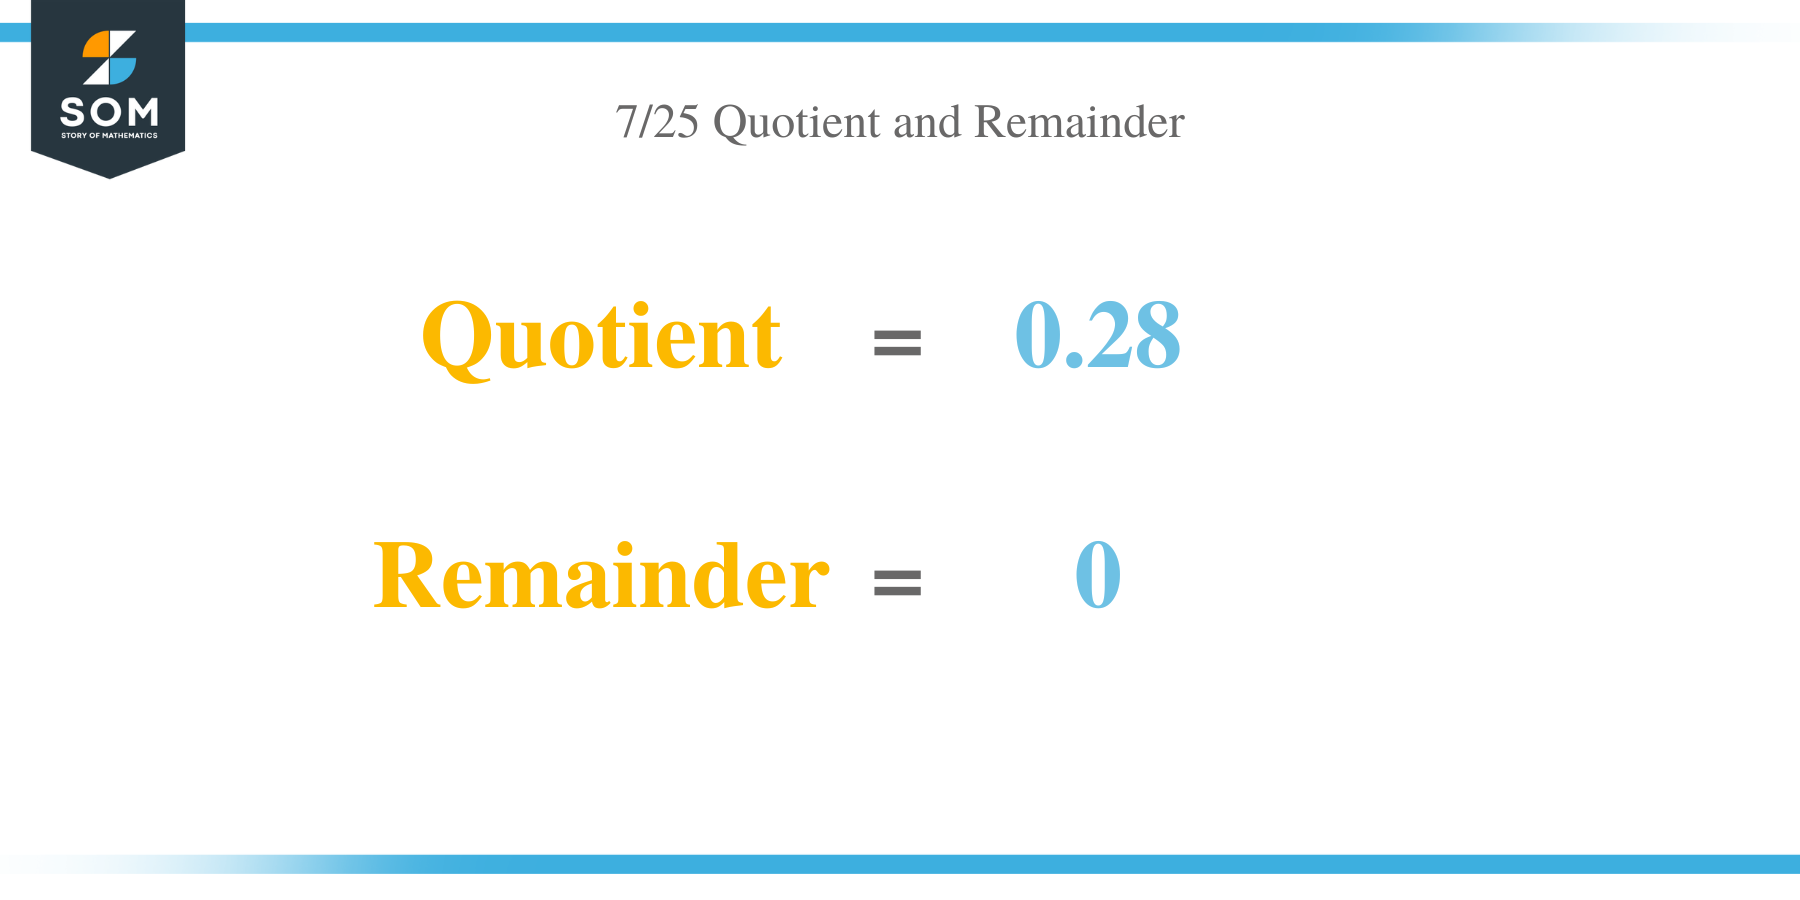 Quotient and remainder of 7 per 25